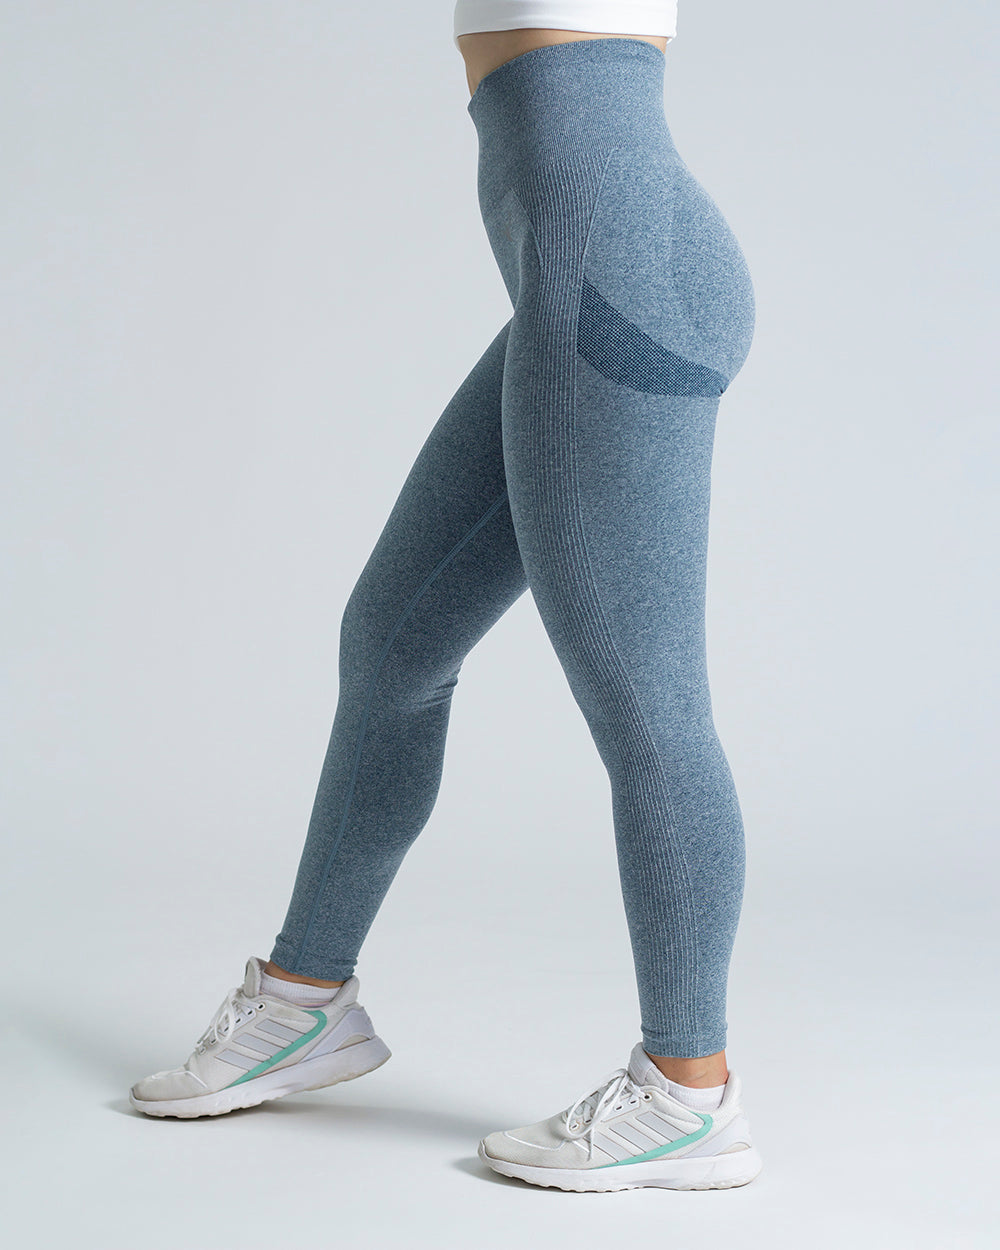 Alphalete Womens Medium Gray Aero Seamless Compression Athletic Leggings